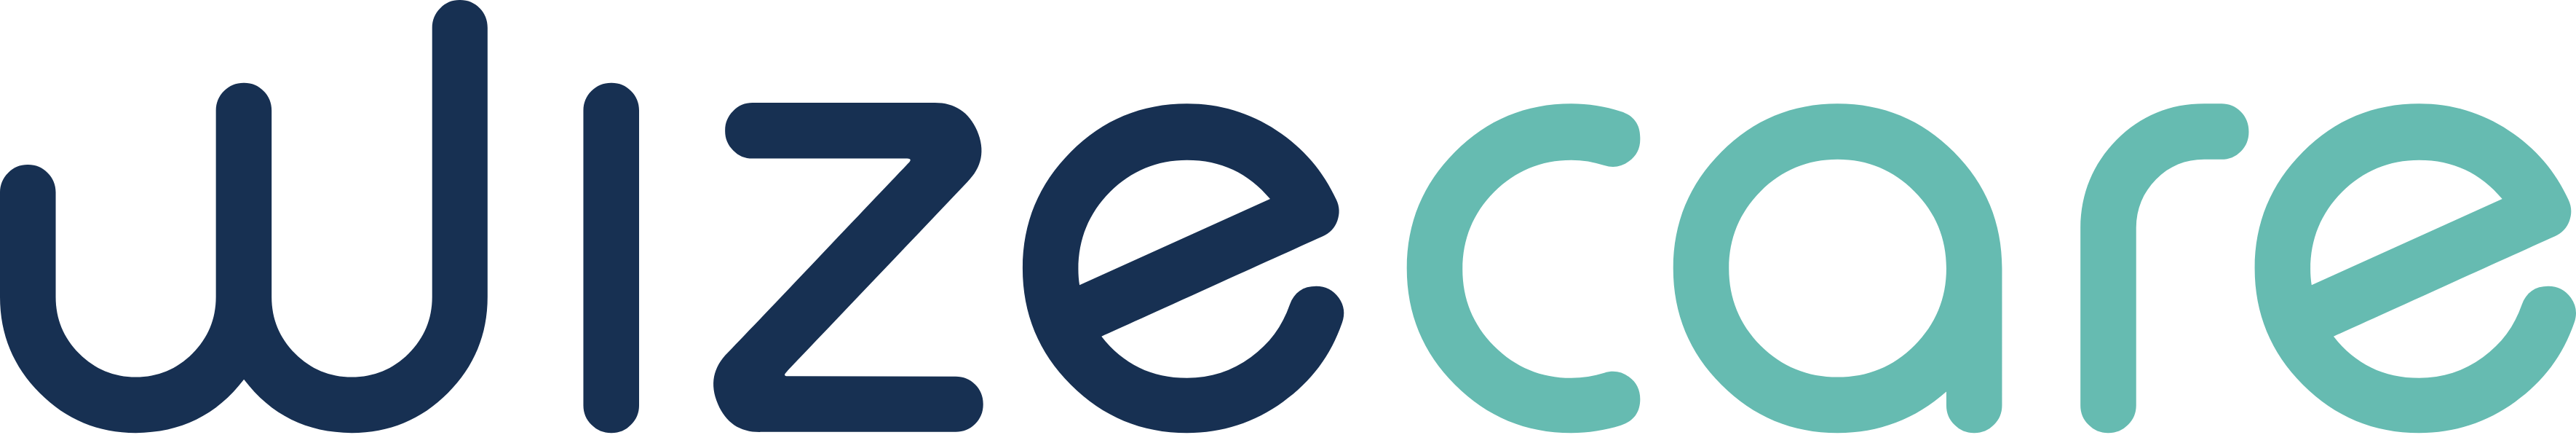 WizeCare logo